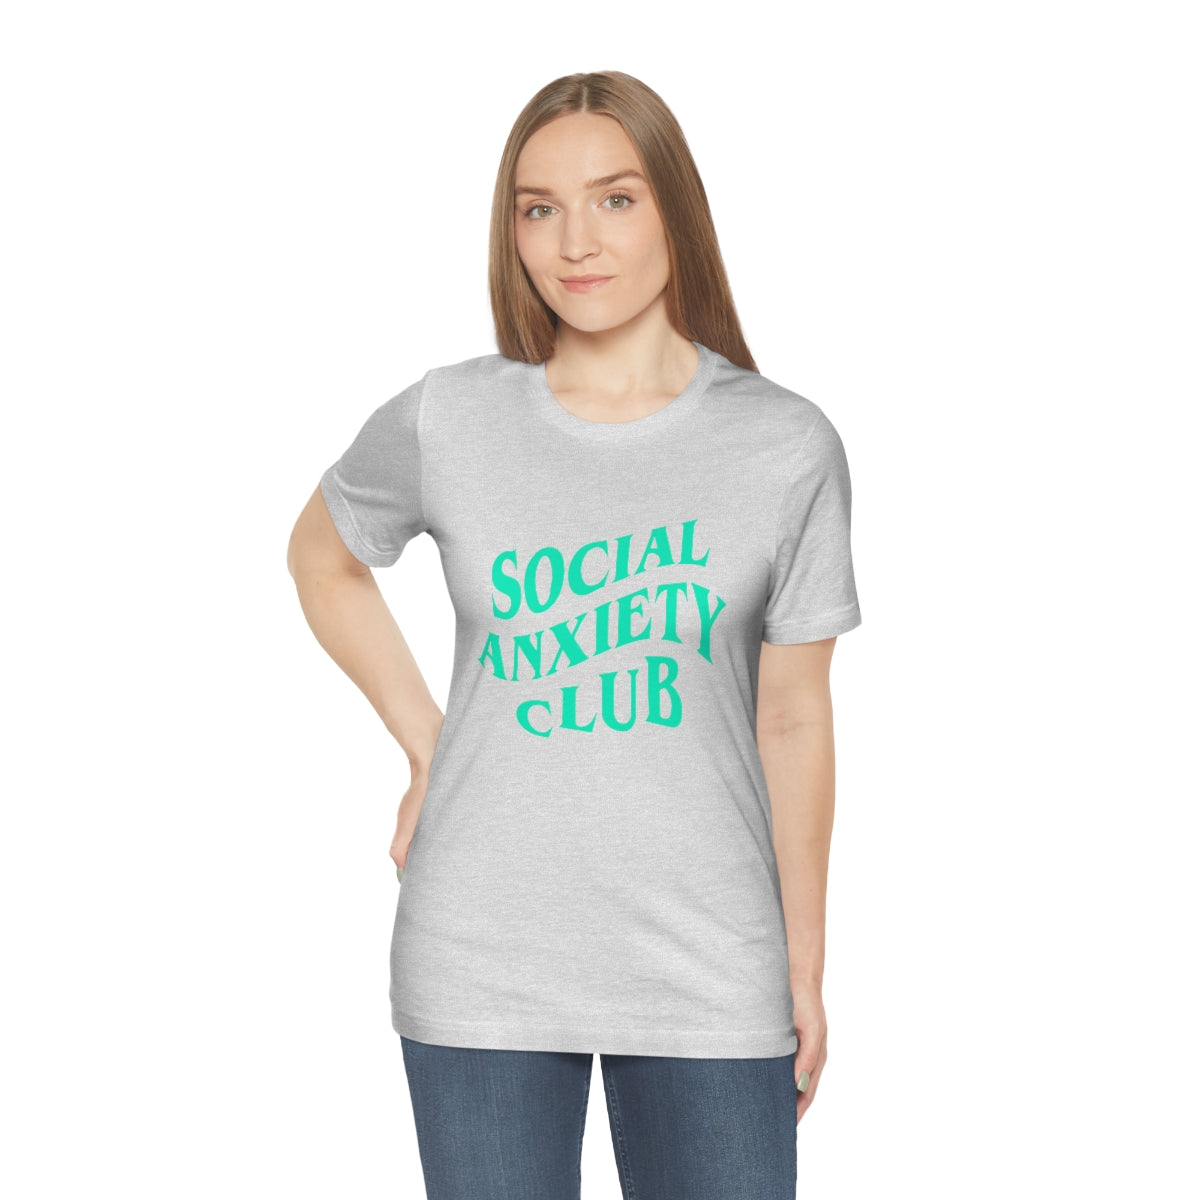 Social Anxiety Club Teal Print Unisex Jersey Short Sleeve Tee